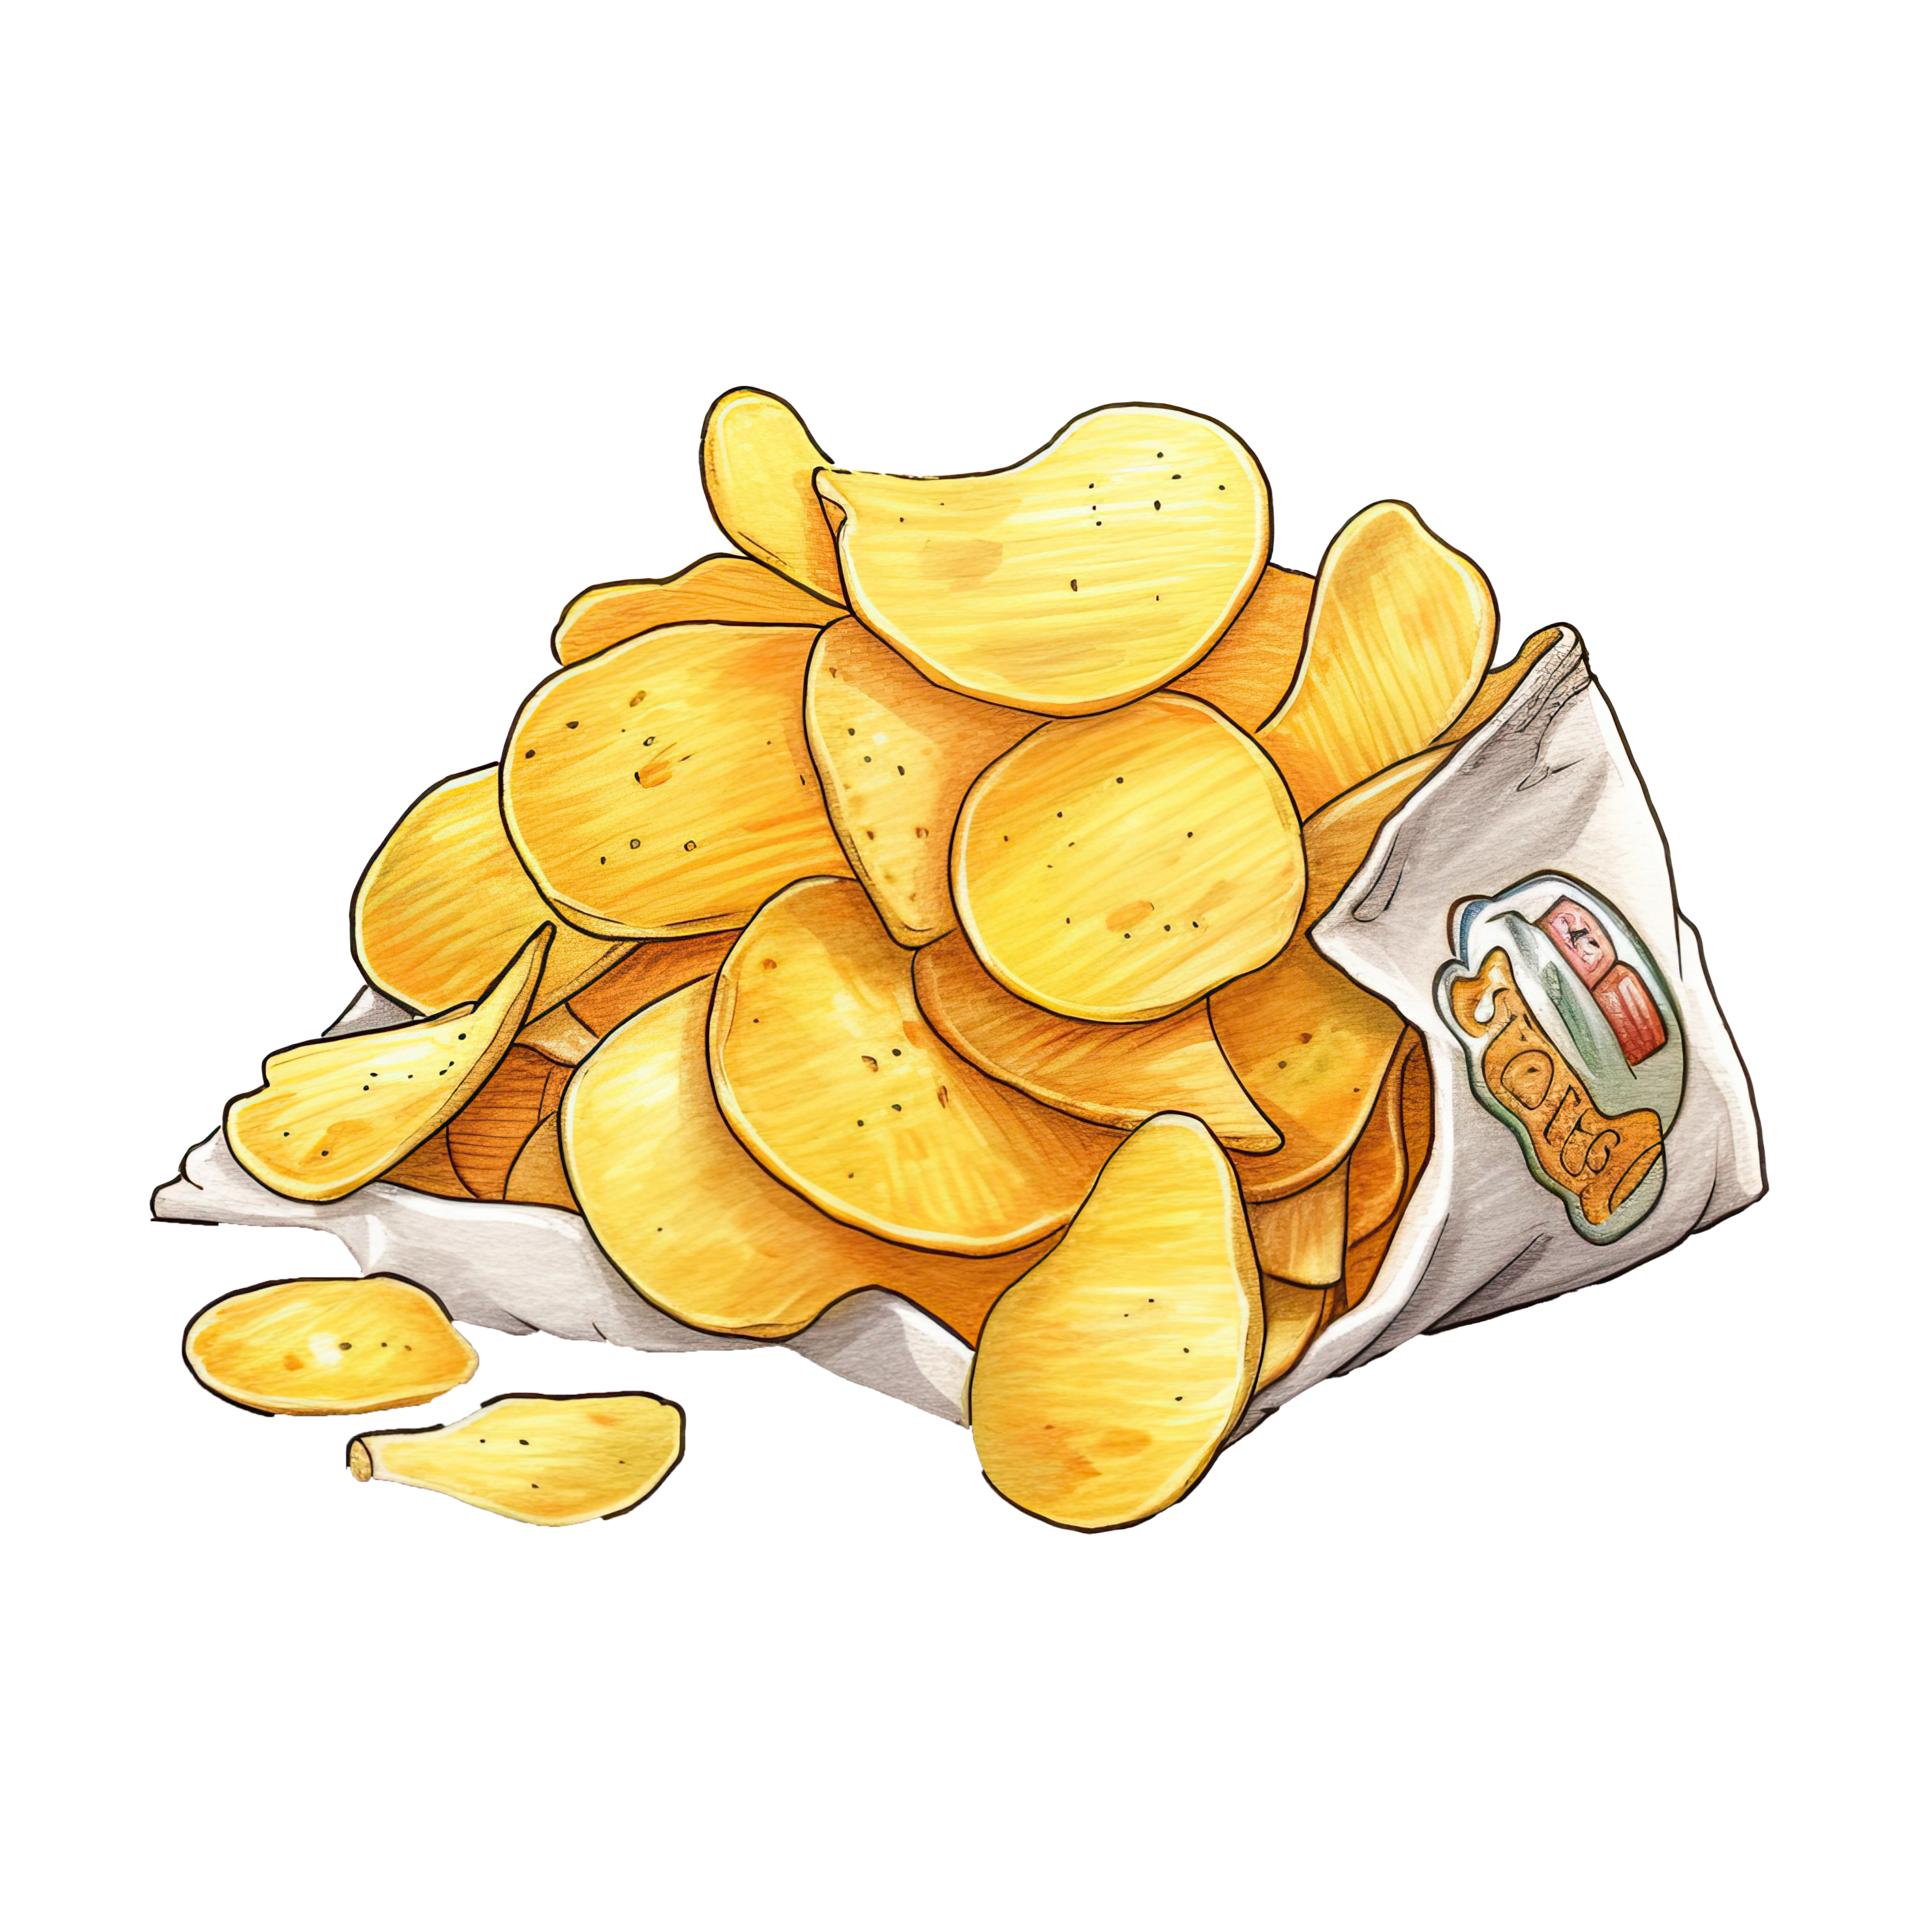 Bag of Potato Chips Sticker | Potato chips, Chips, Lays potato chips